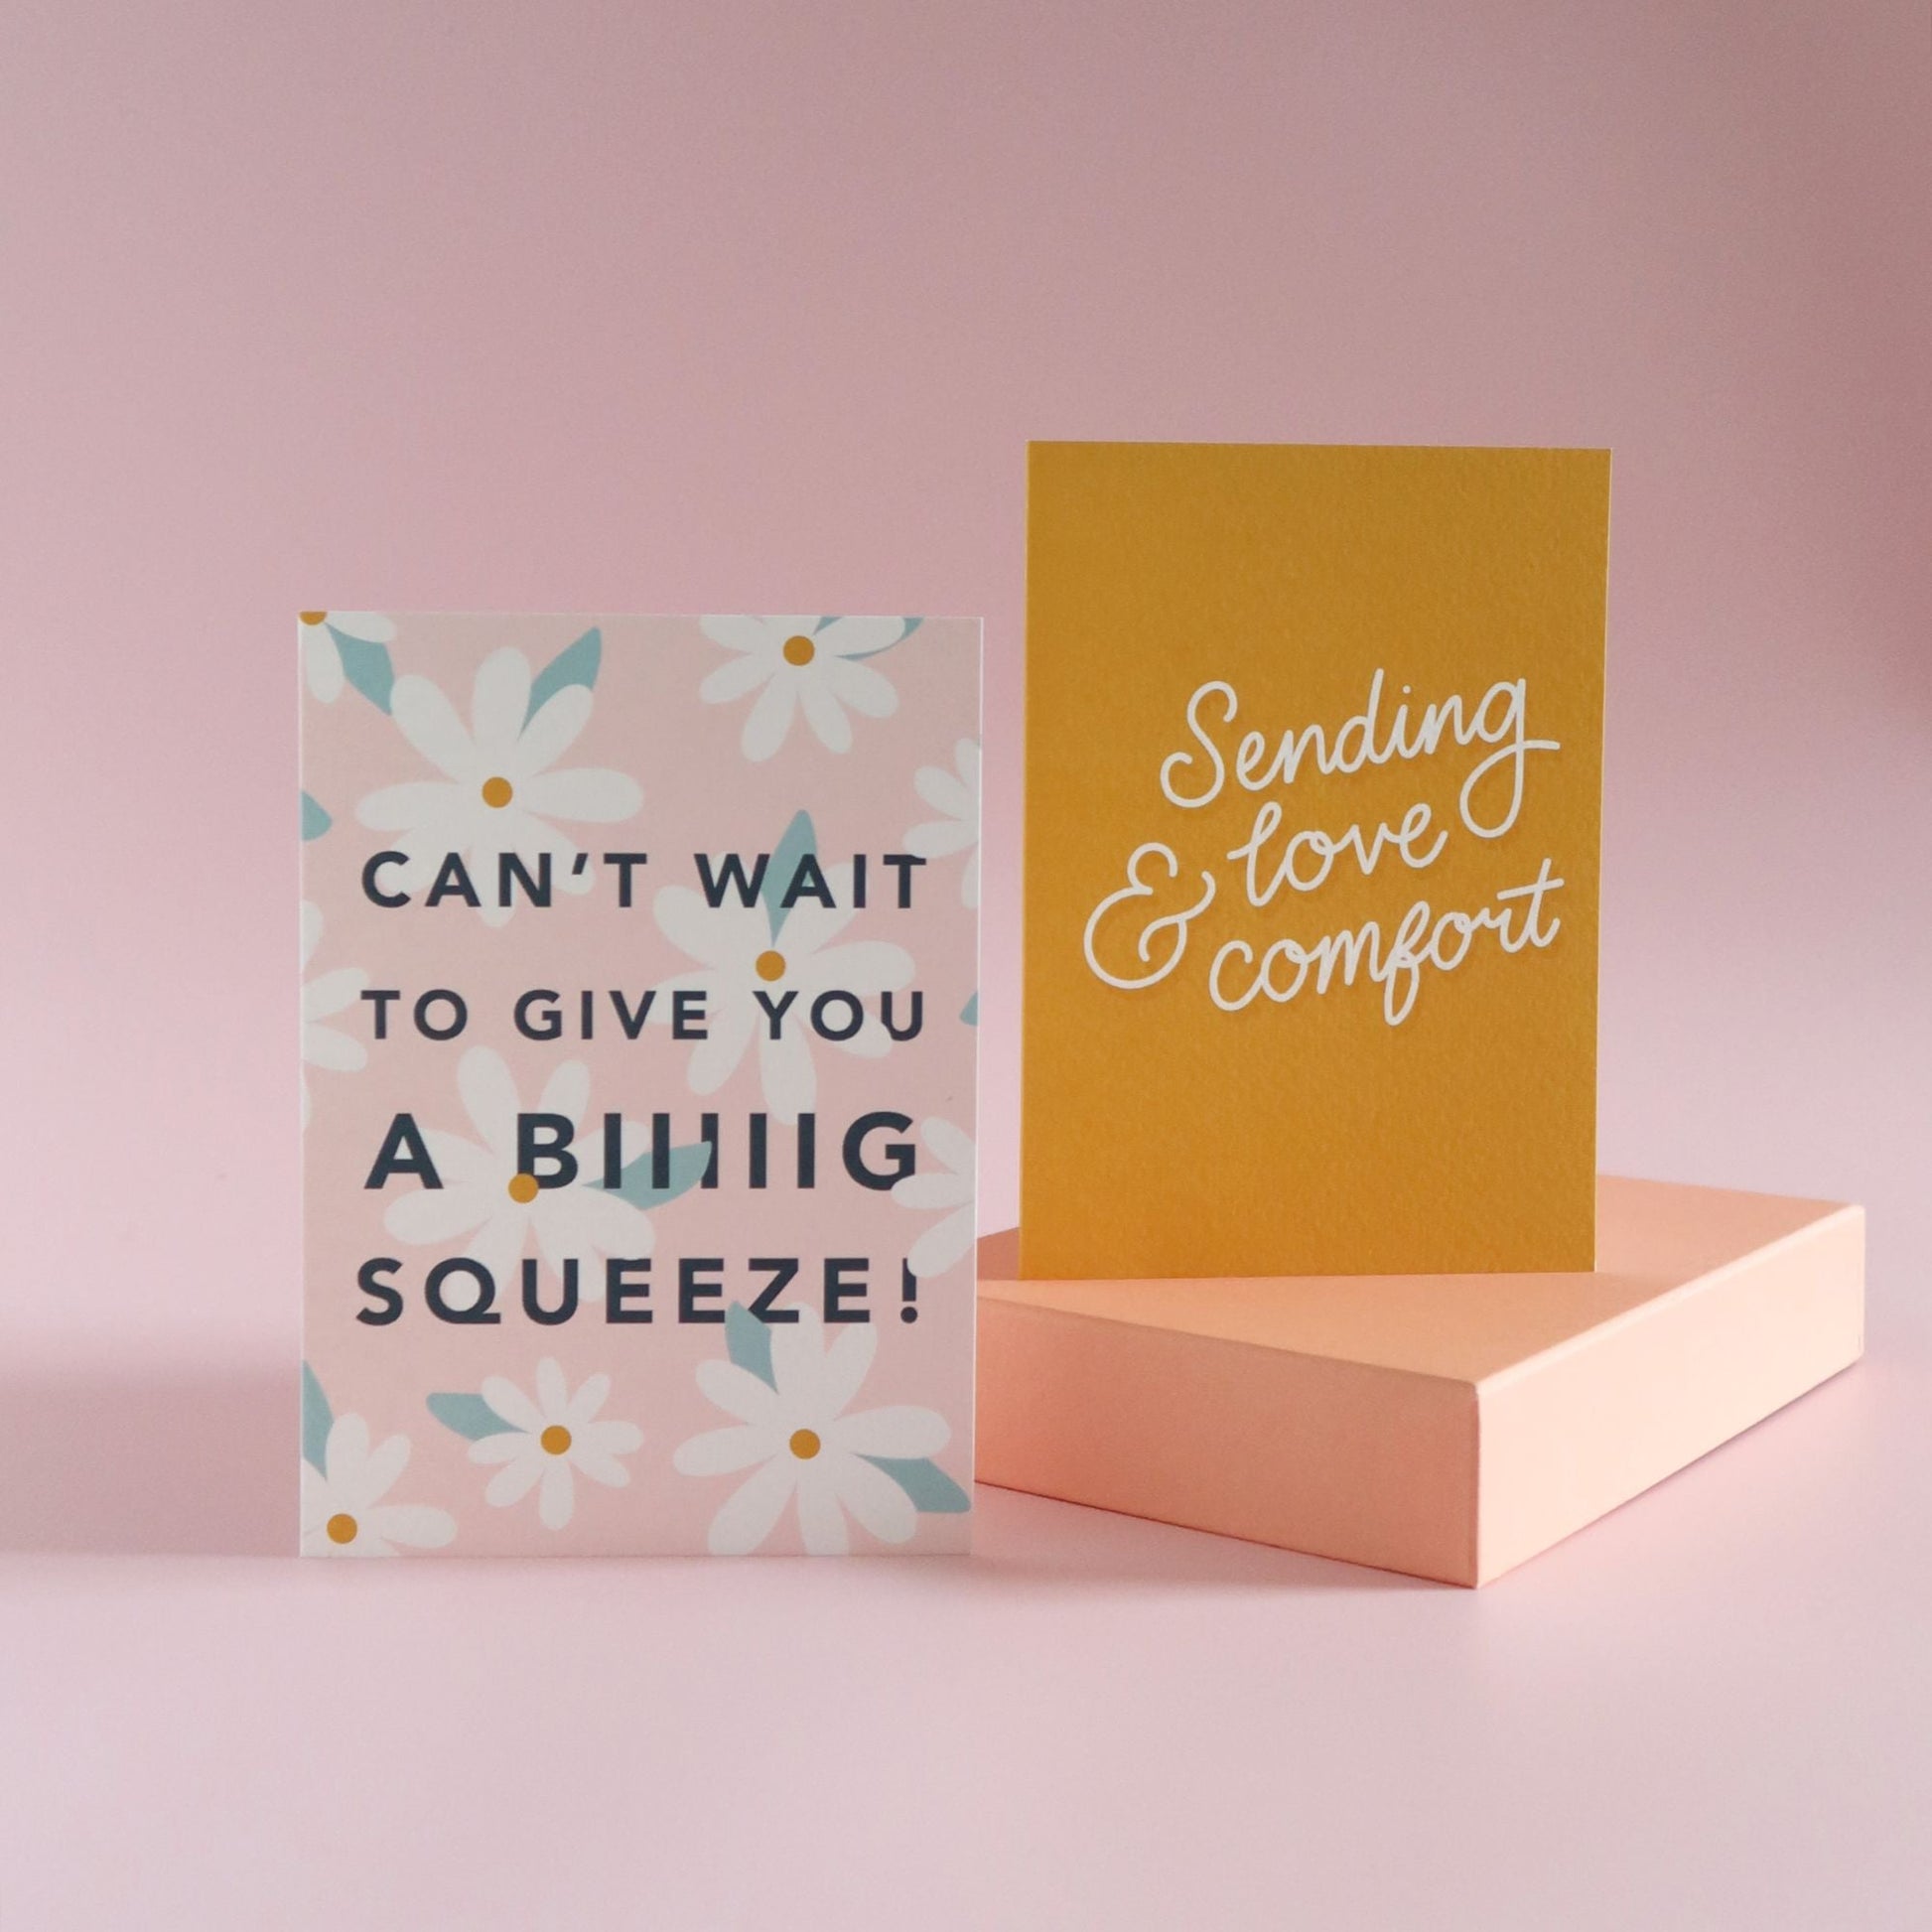 Sending Love & Comfort Card - daniwhitedesign